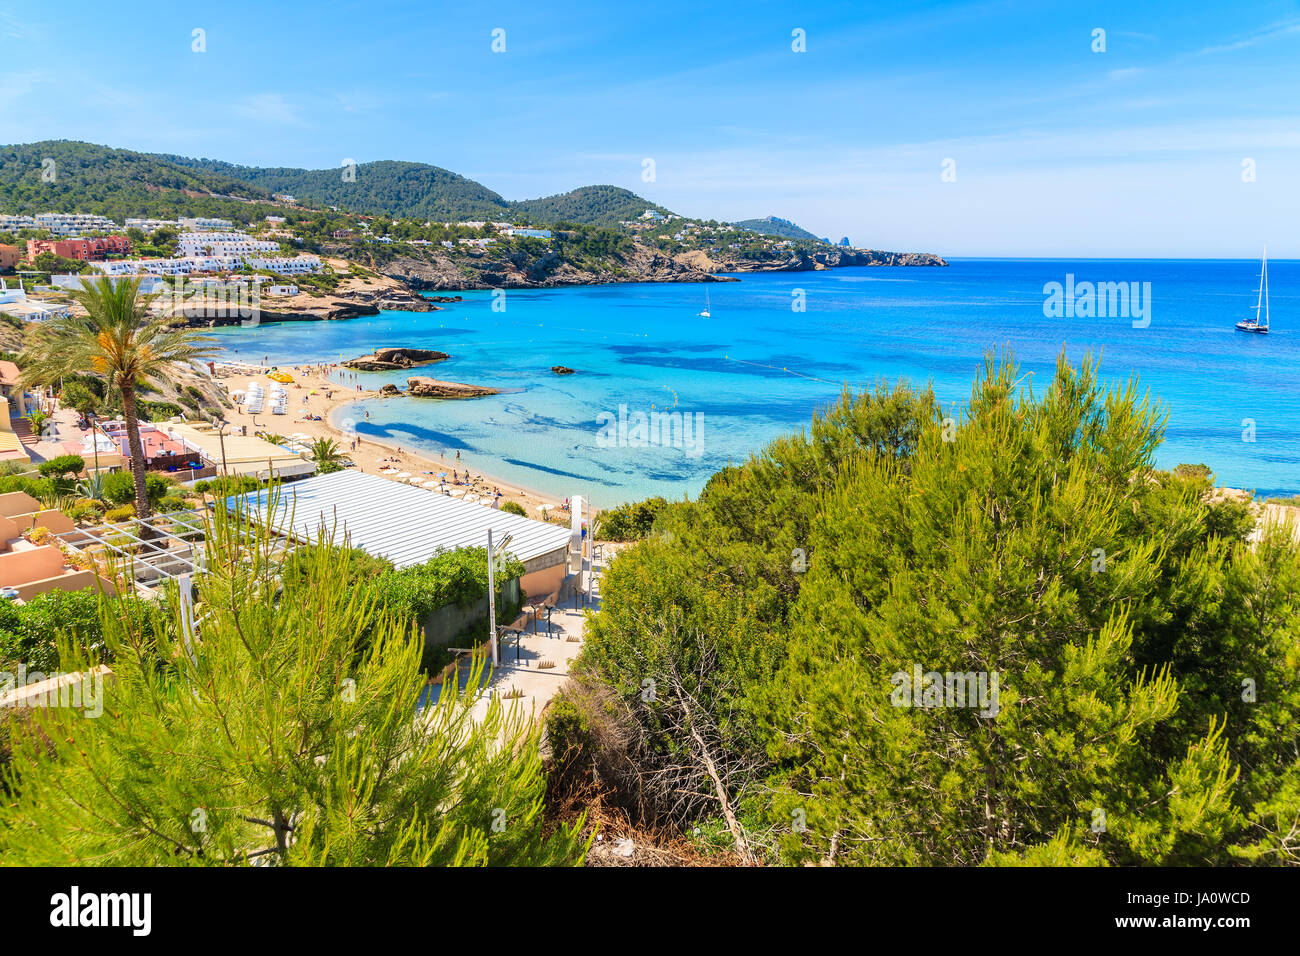 View of Cala Tarida bay and beach, Ibiza island, Spain. Stock Photo